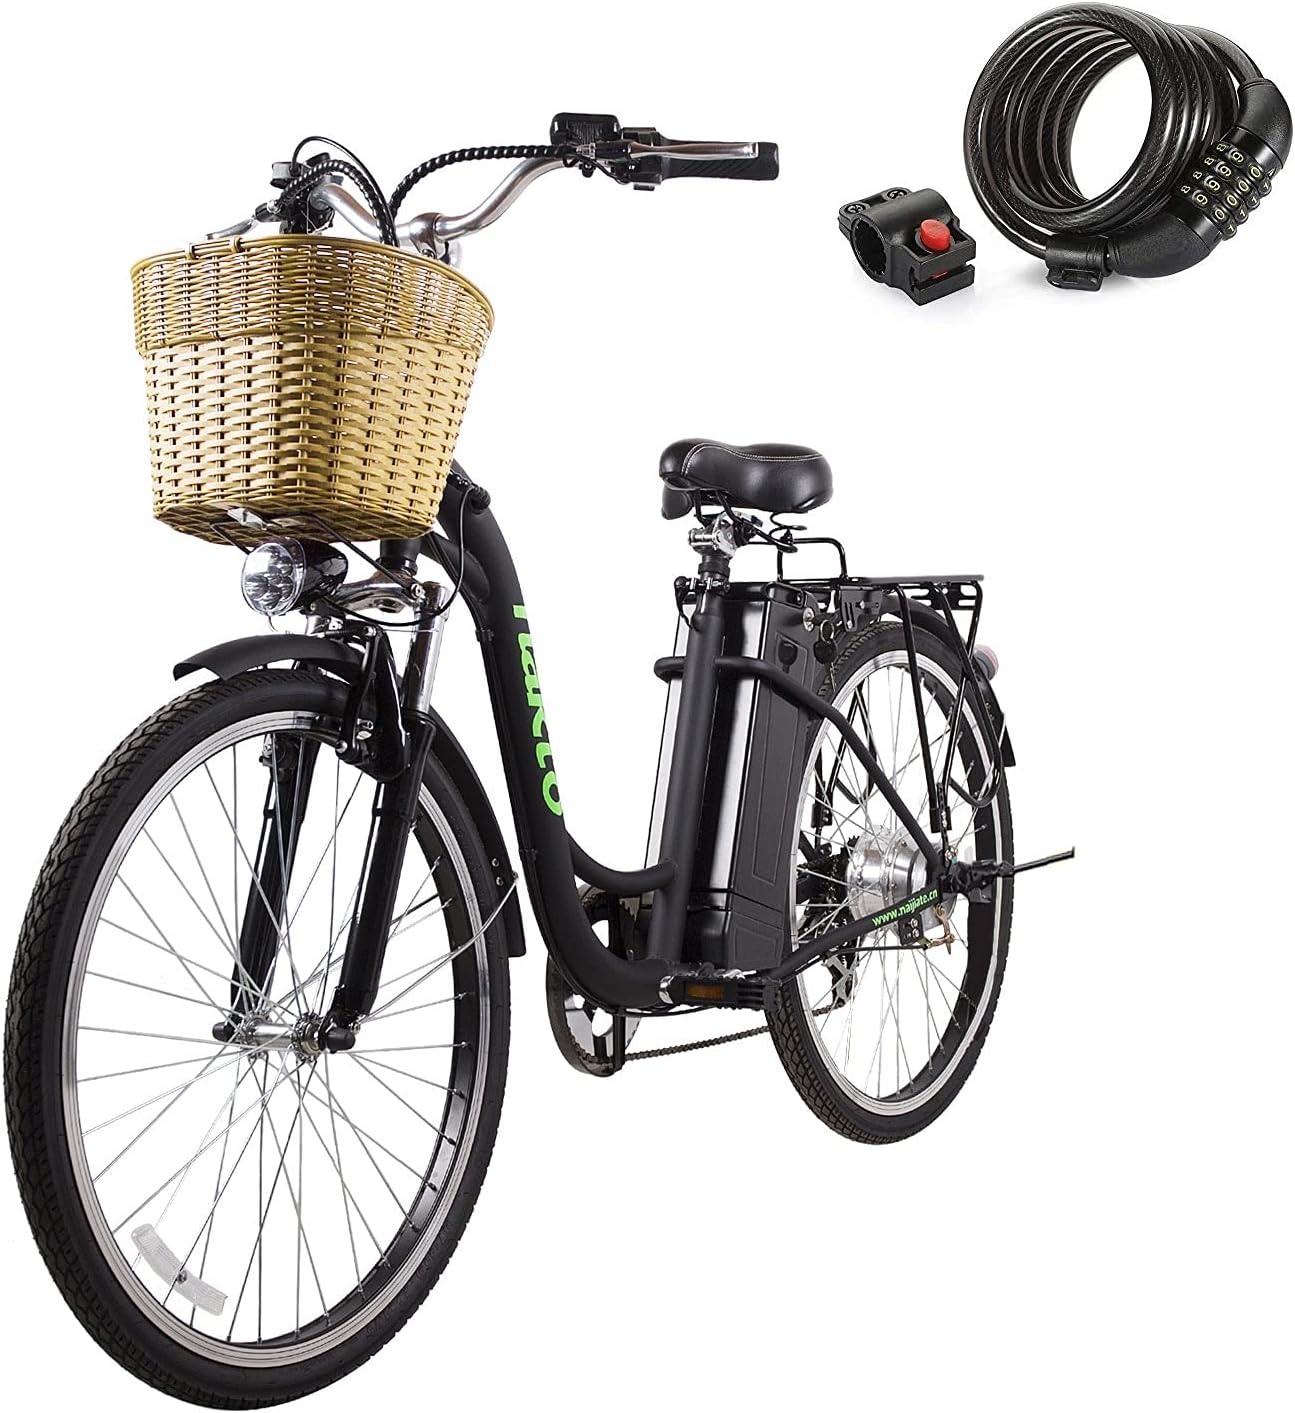 editor choice as e bike for 300$